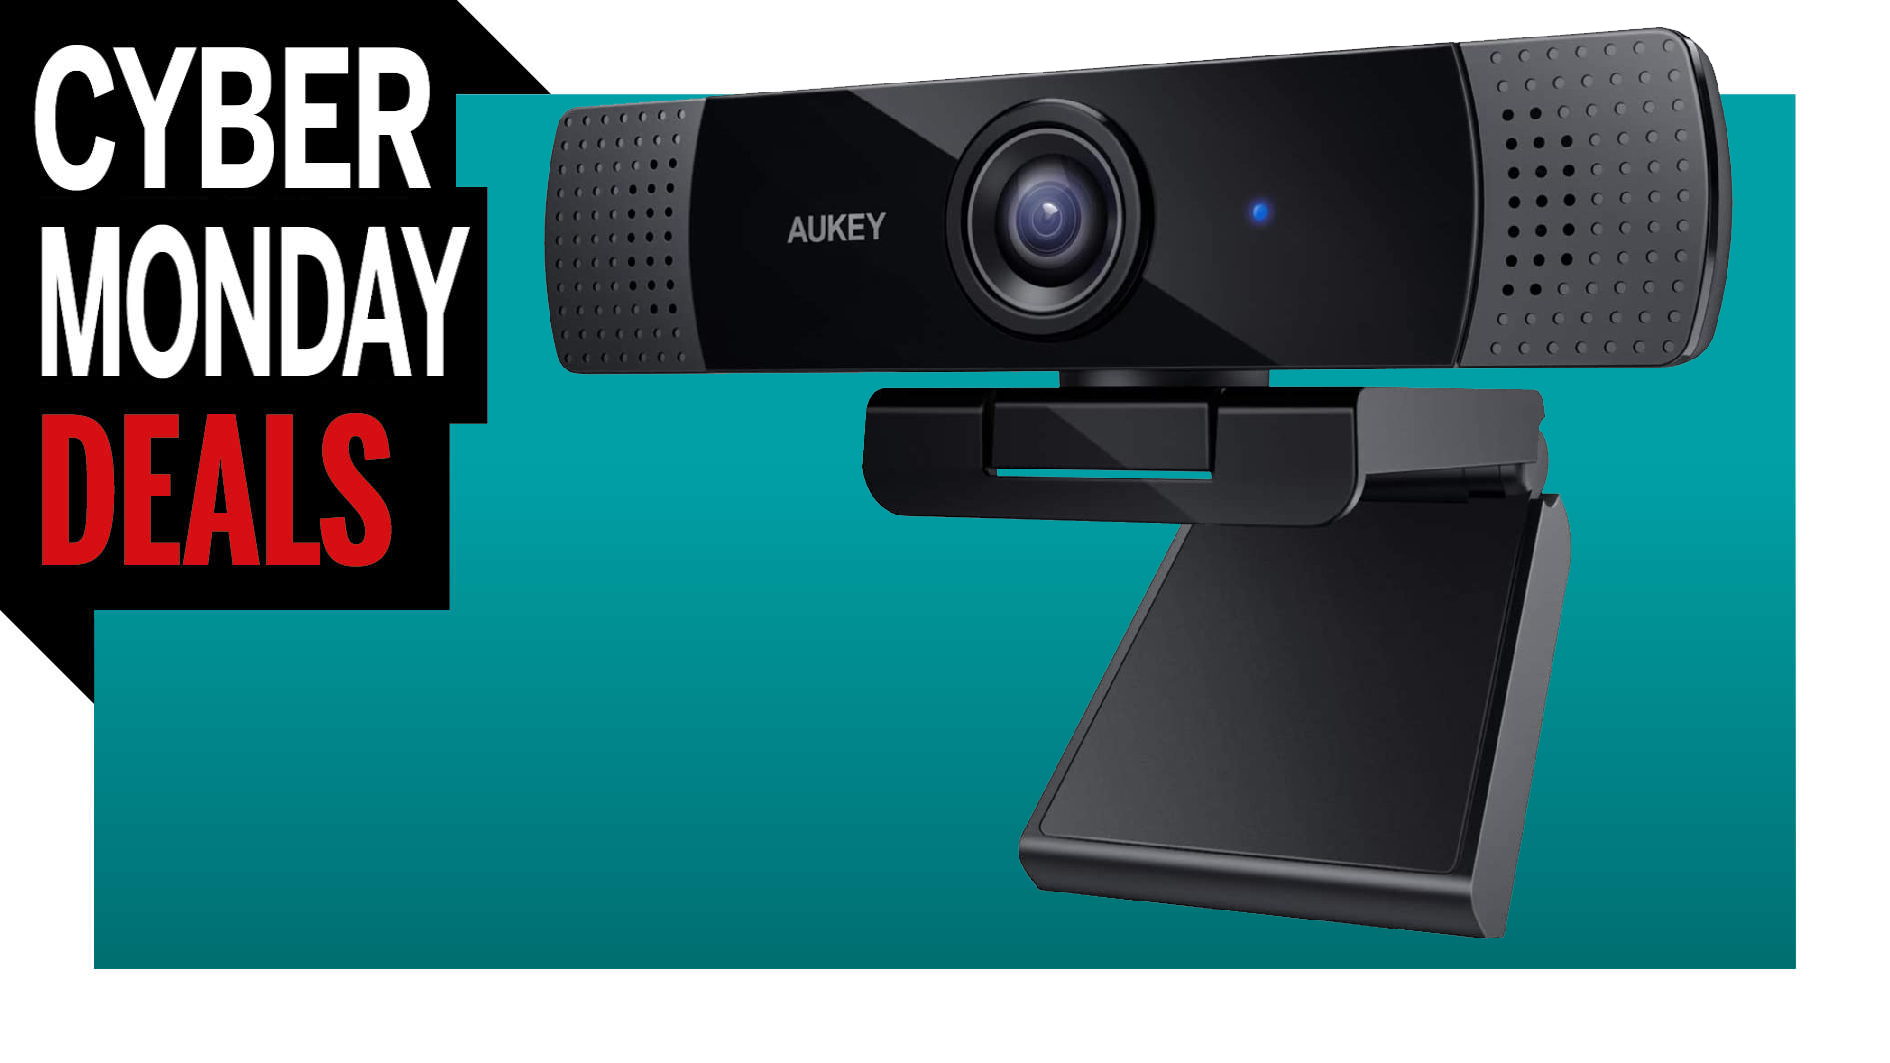  Cyber Monday webcam deal: Get a decent 1080p webcam for just $30 